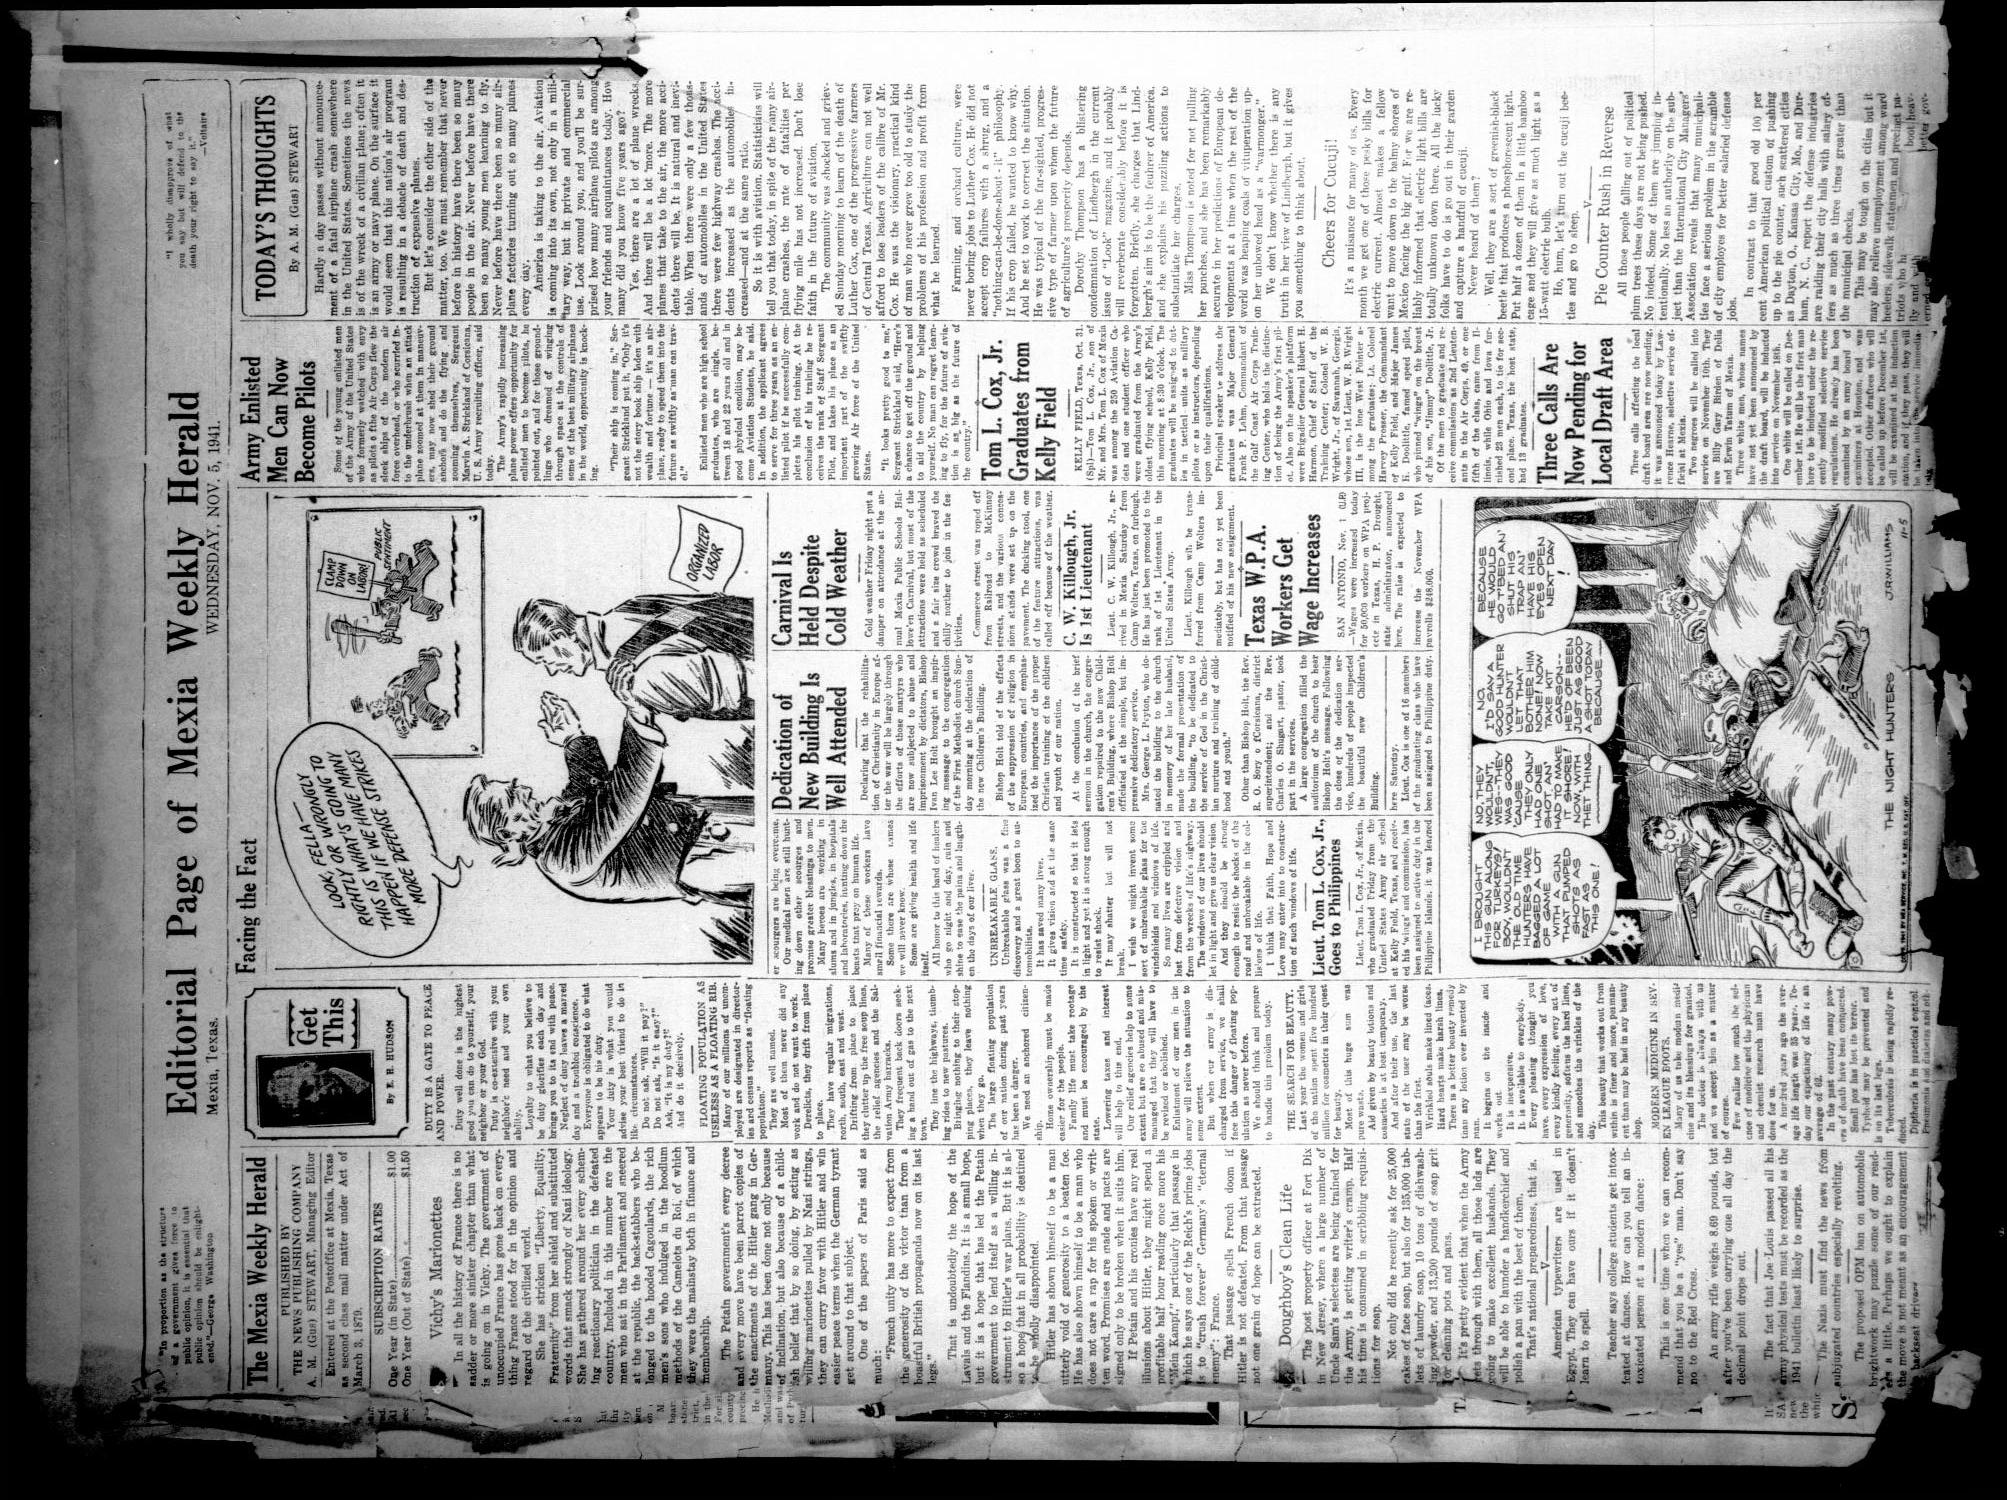 The Mexia Weekly Herald (Mexia, Tex.), Vol. 43, No. 45, Ed. 1 Friday, November 7, 1941
                                                
                                                    [Sequence #]: 4 of 8
                                                